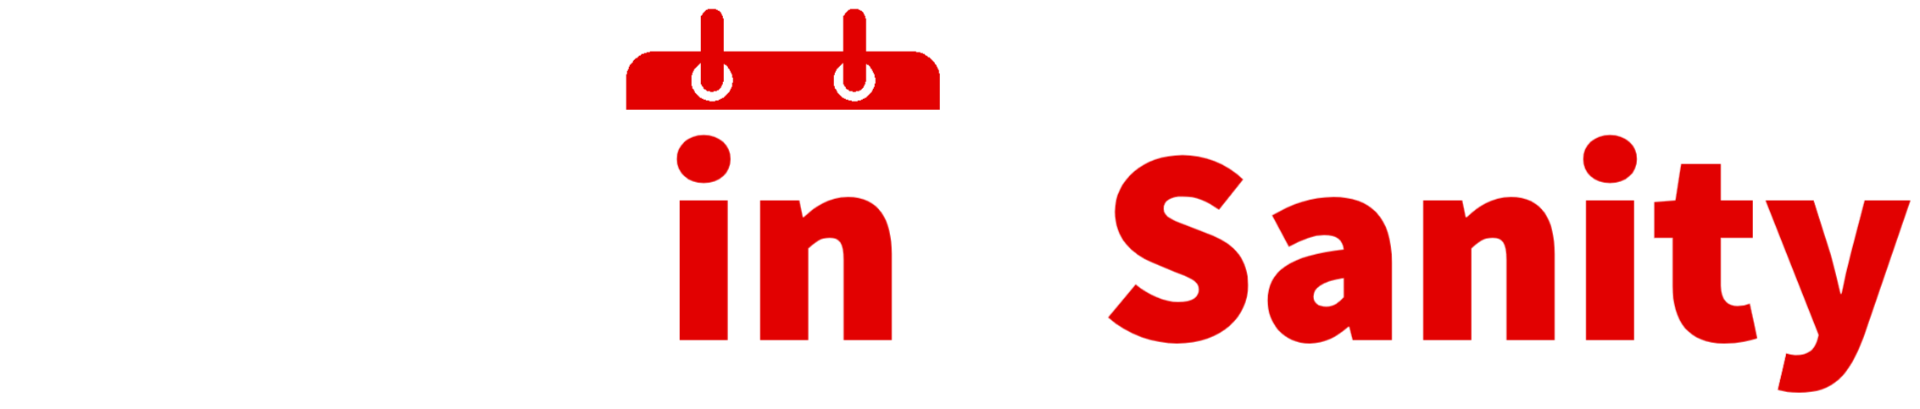 MeetingSanity logo